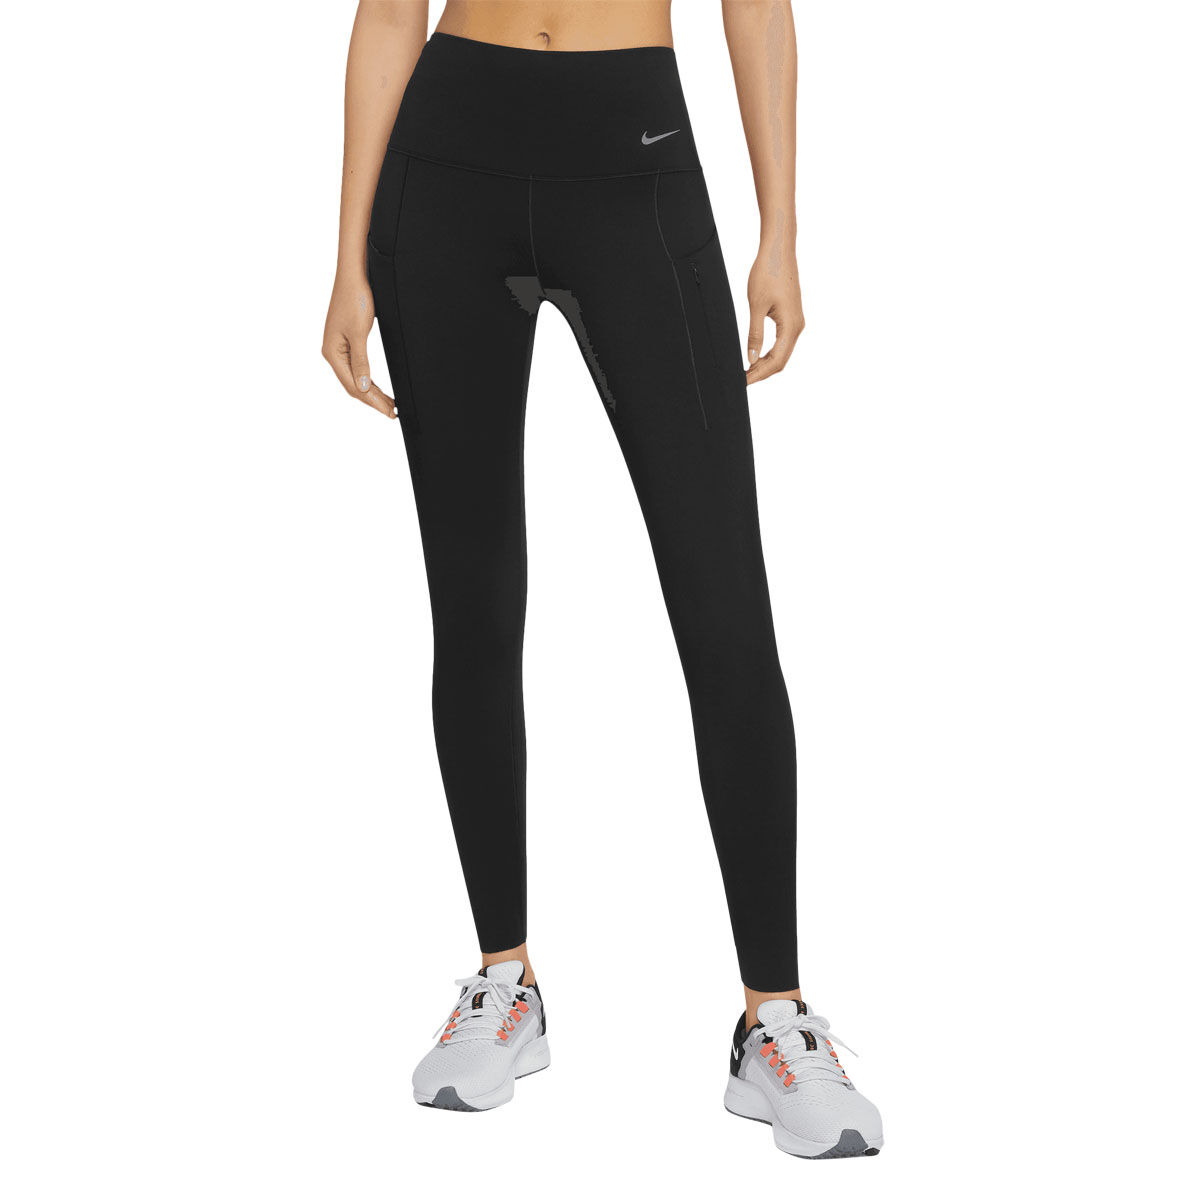 Athletic Works Women's Dri-Works Core Active Legging Black - Size Large  (12/14)